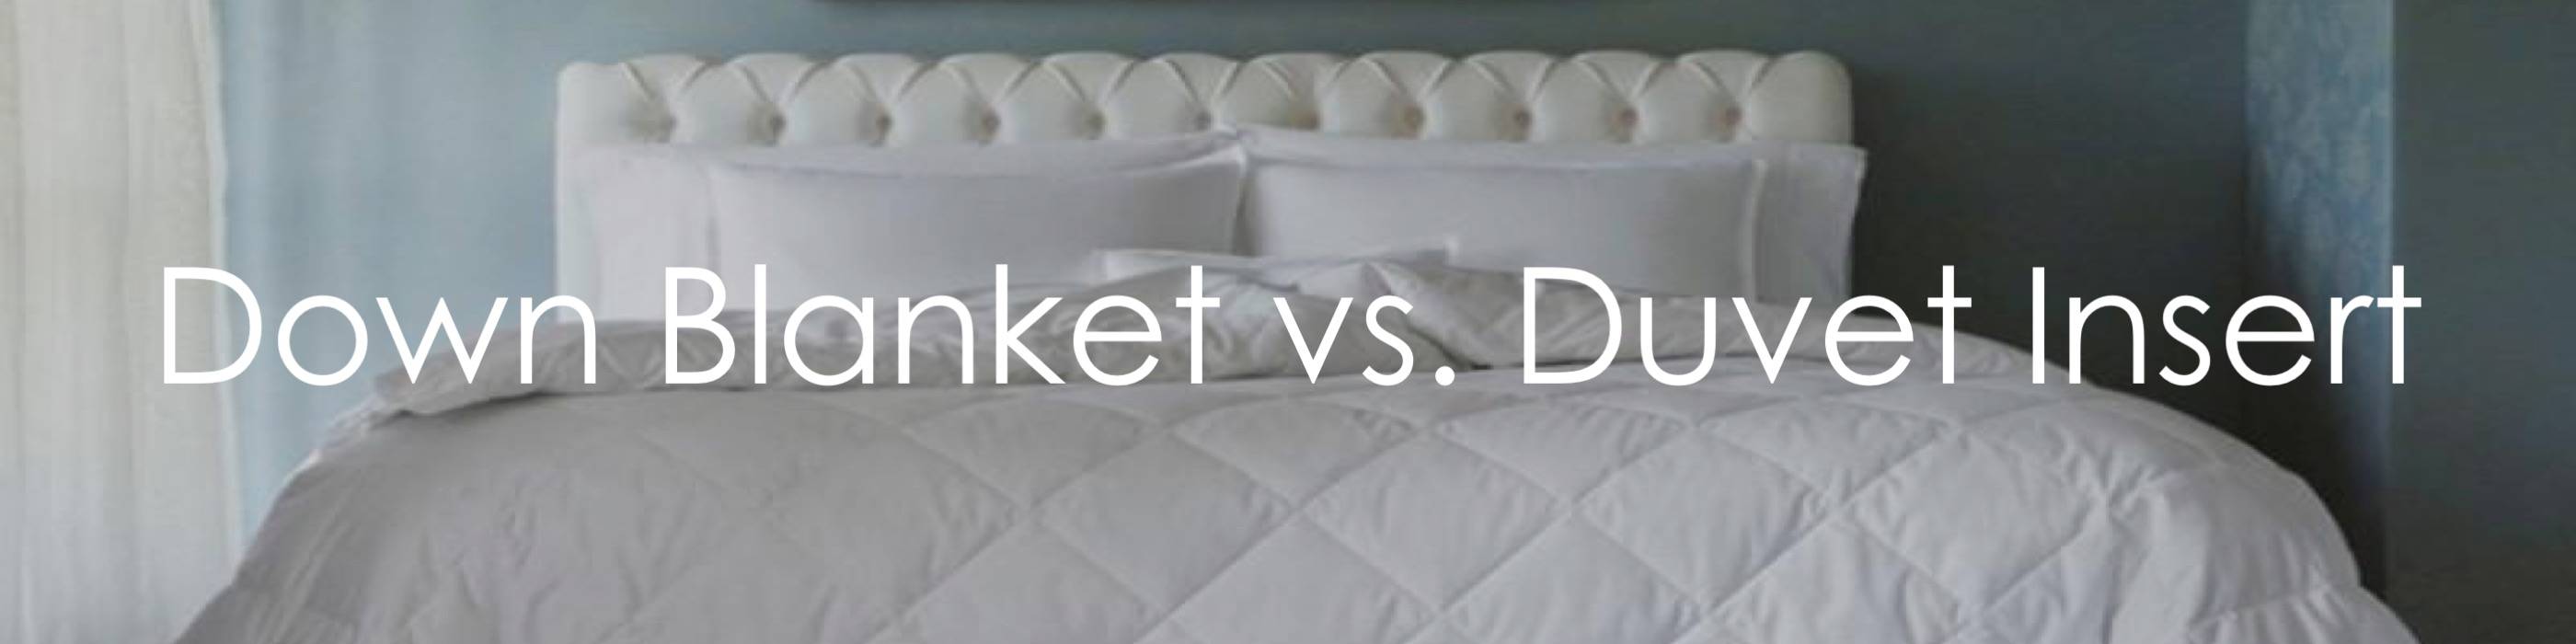 Down Blanket Cover Vs Duvet Insert, Using A Duvet Cover Without An Insert